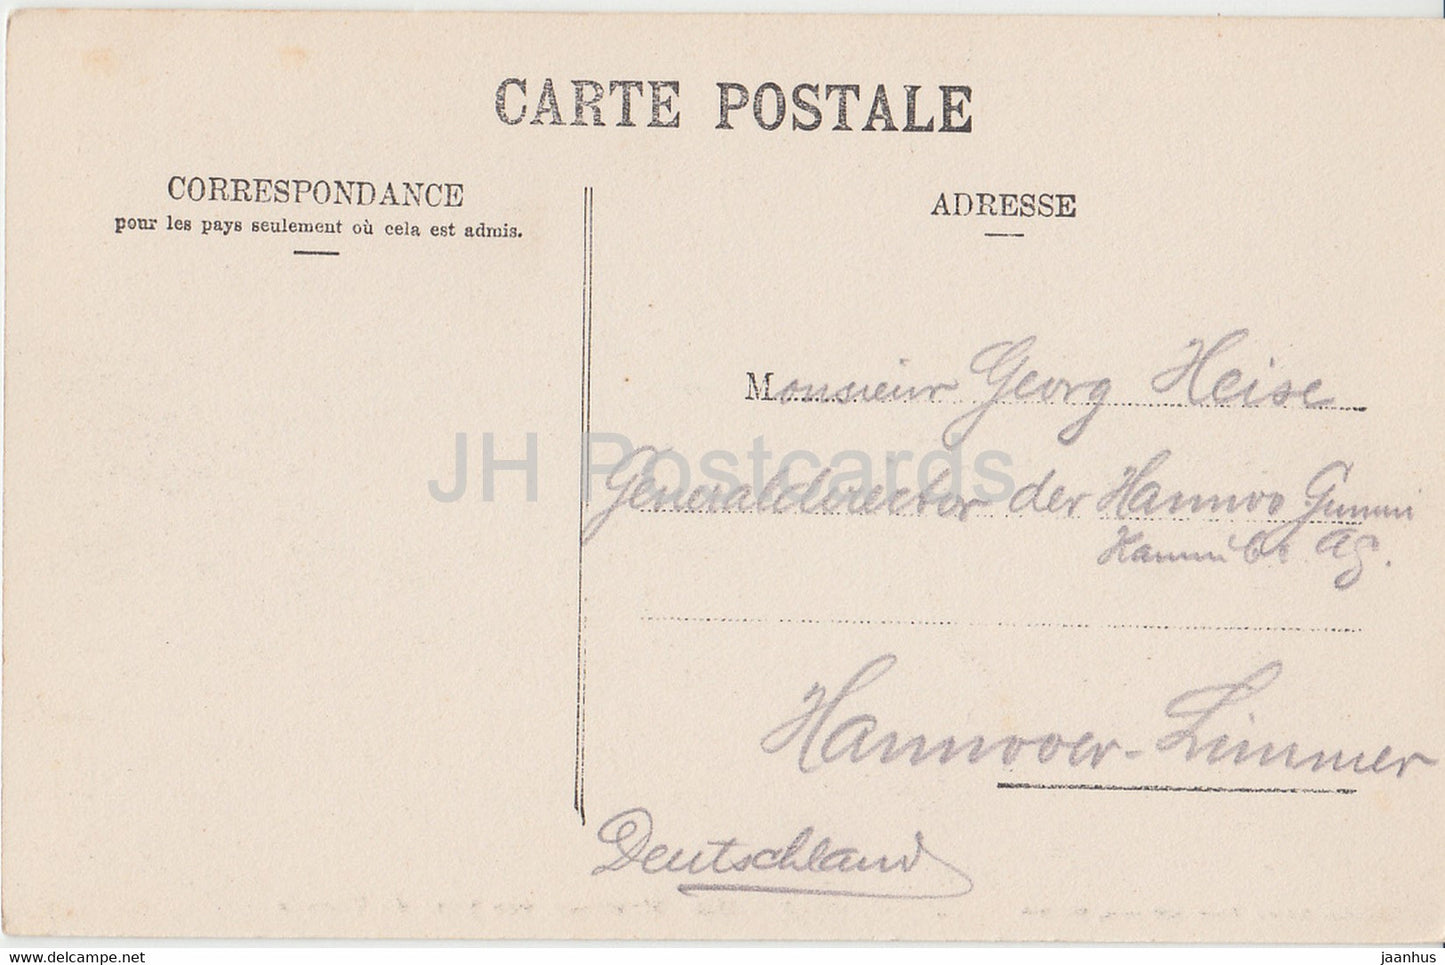 Montreux - vue prise de Clarens - steamer - ship - 5839 - old postcard - Switzerland - used